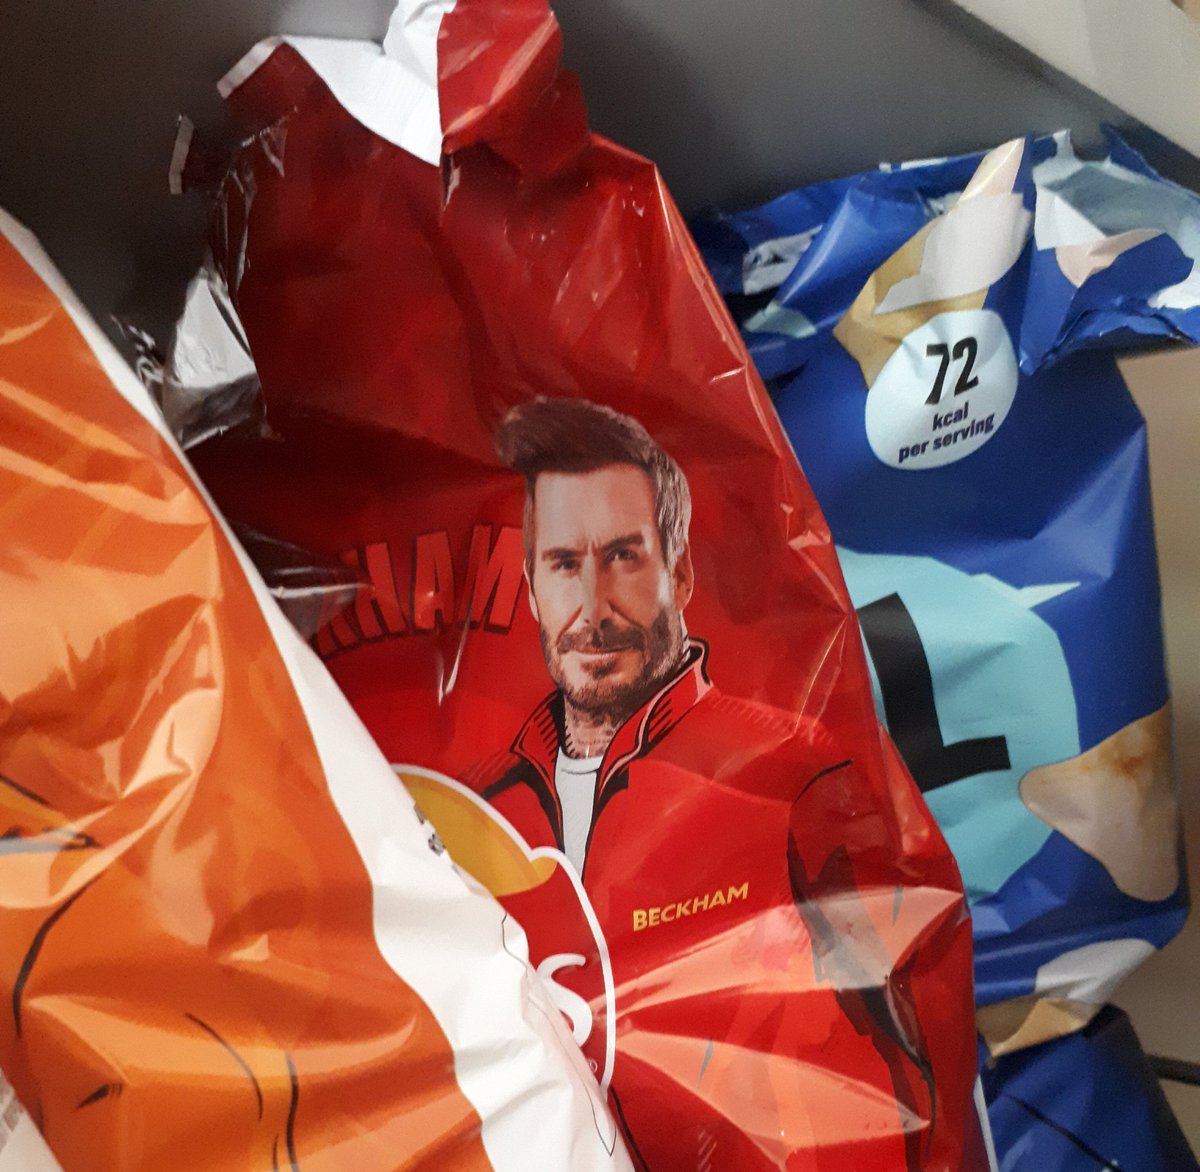 I feel like Beckham's judging me when I reach for a packet of crisps.